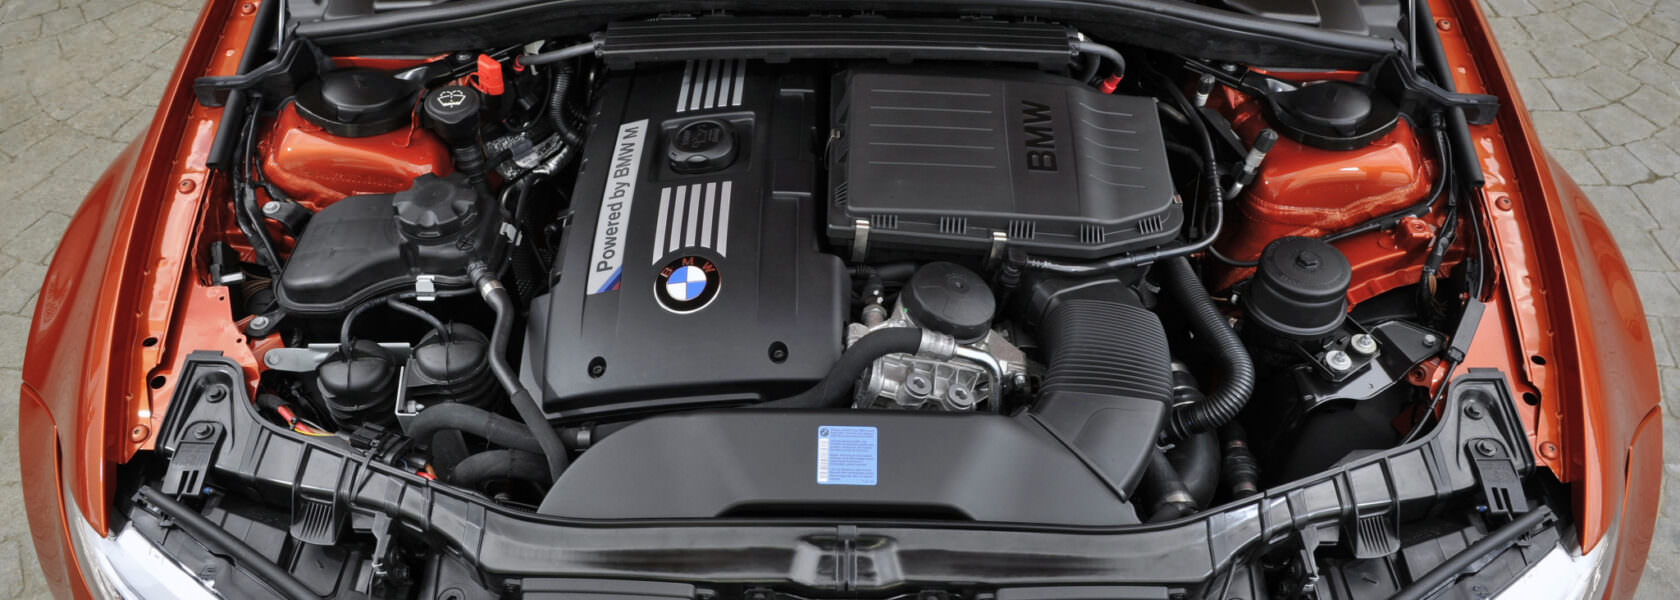 Moteur BMW 6 cylindres 1M 2010